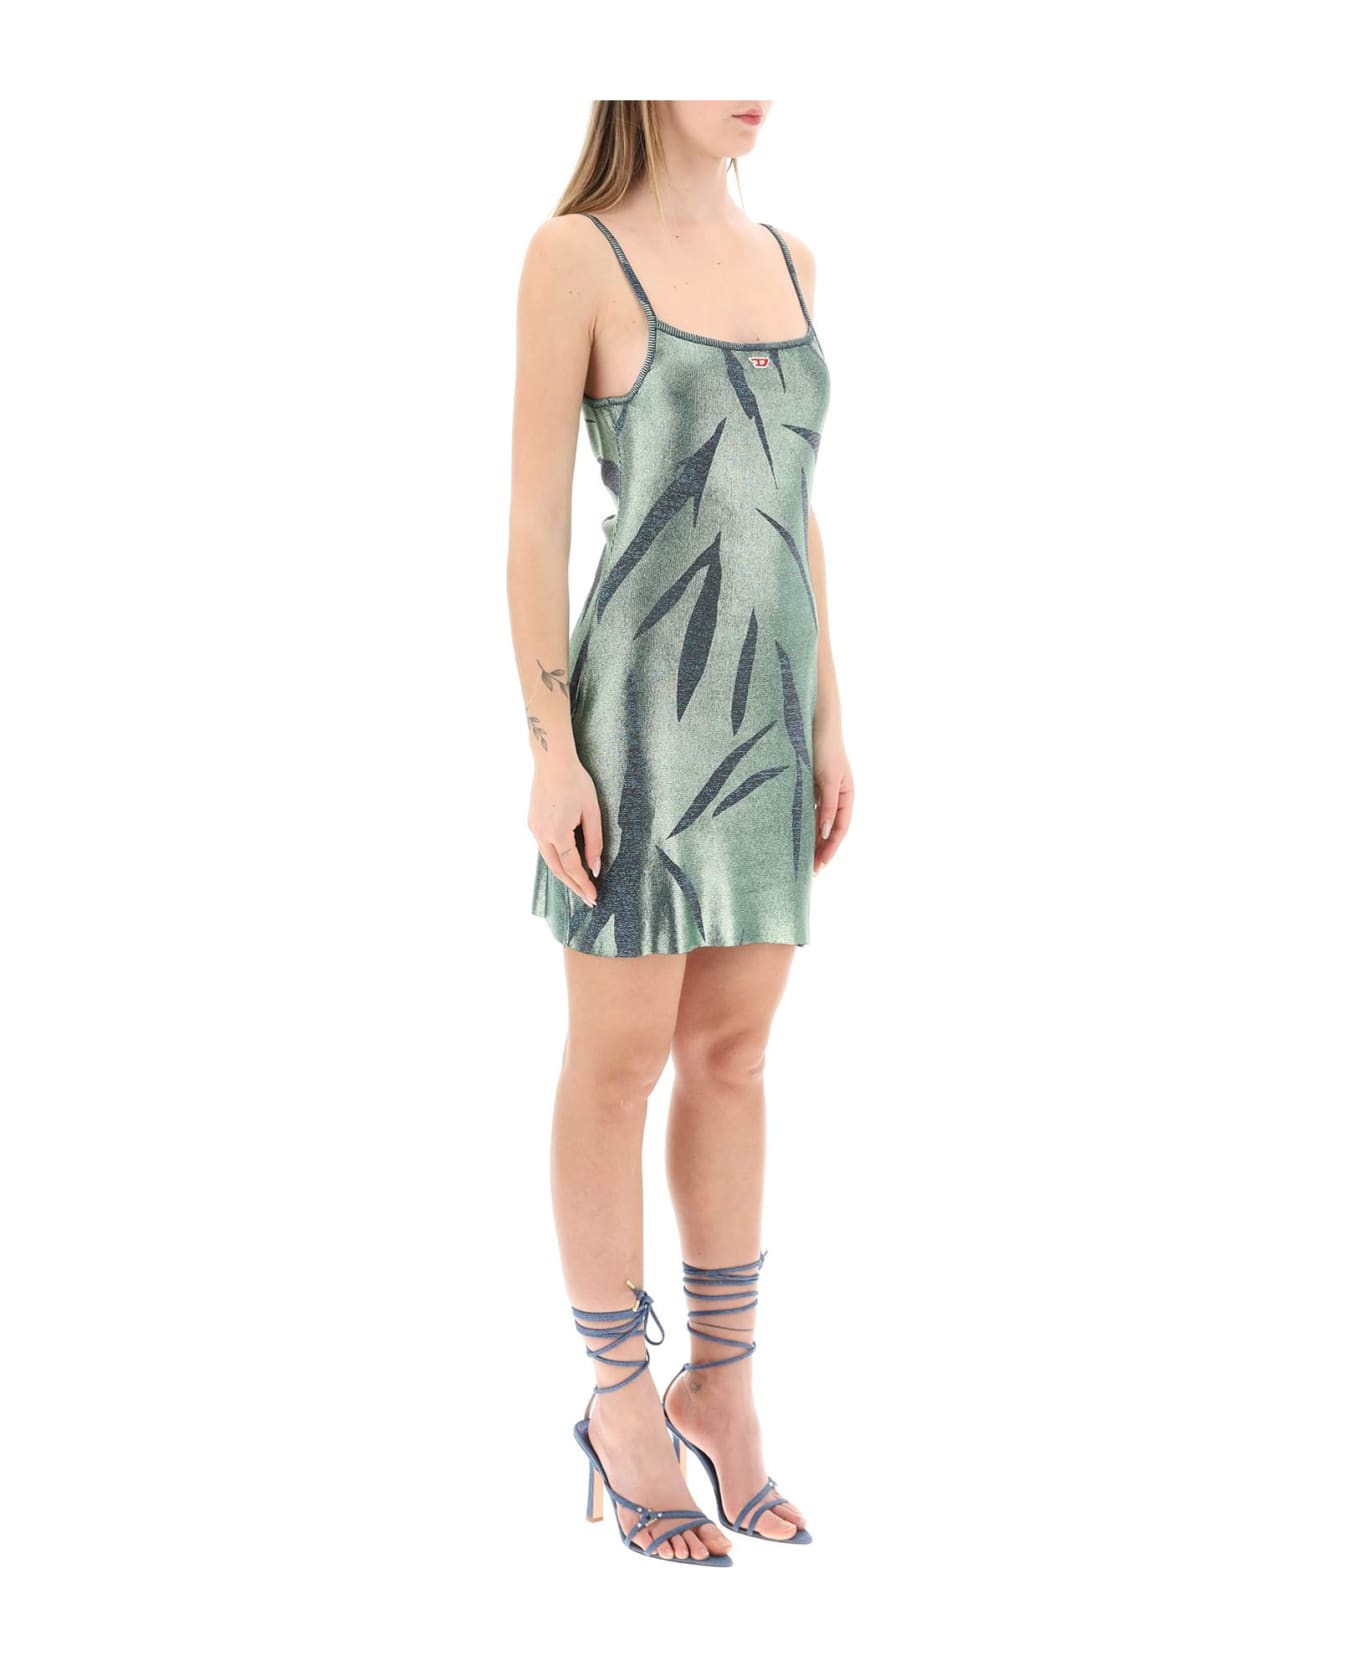 Diesel 'm-areah' Mini Dress In Laminated Lurex Knit - 324 APPLE GREEN (Green)